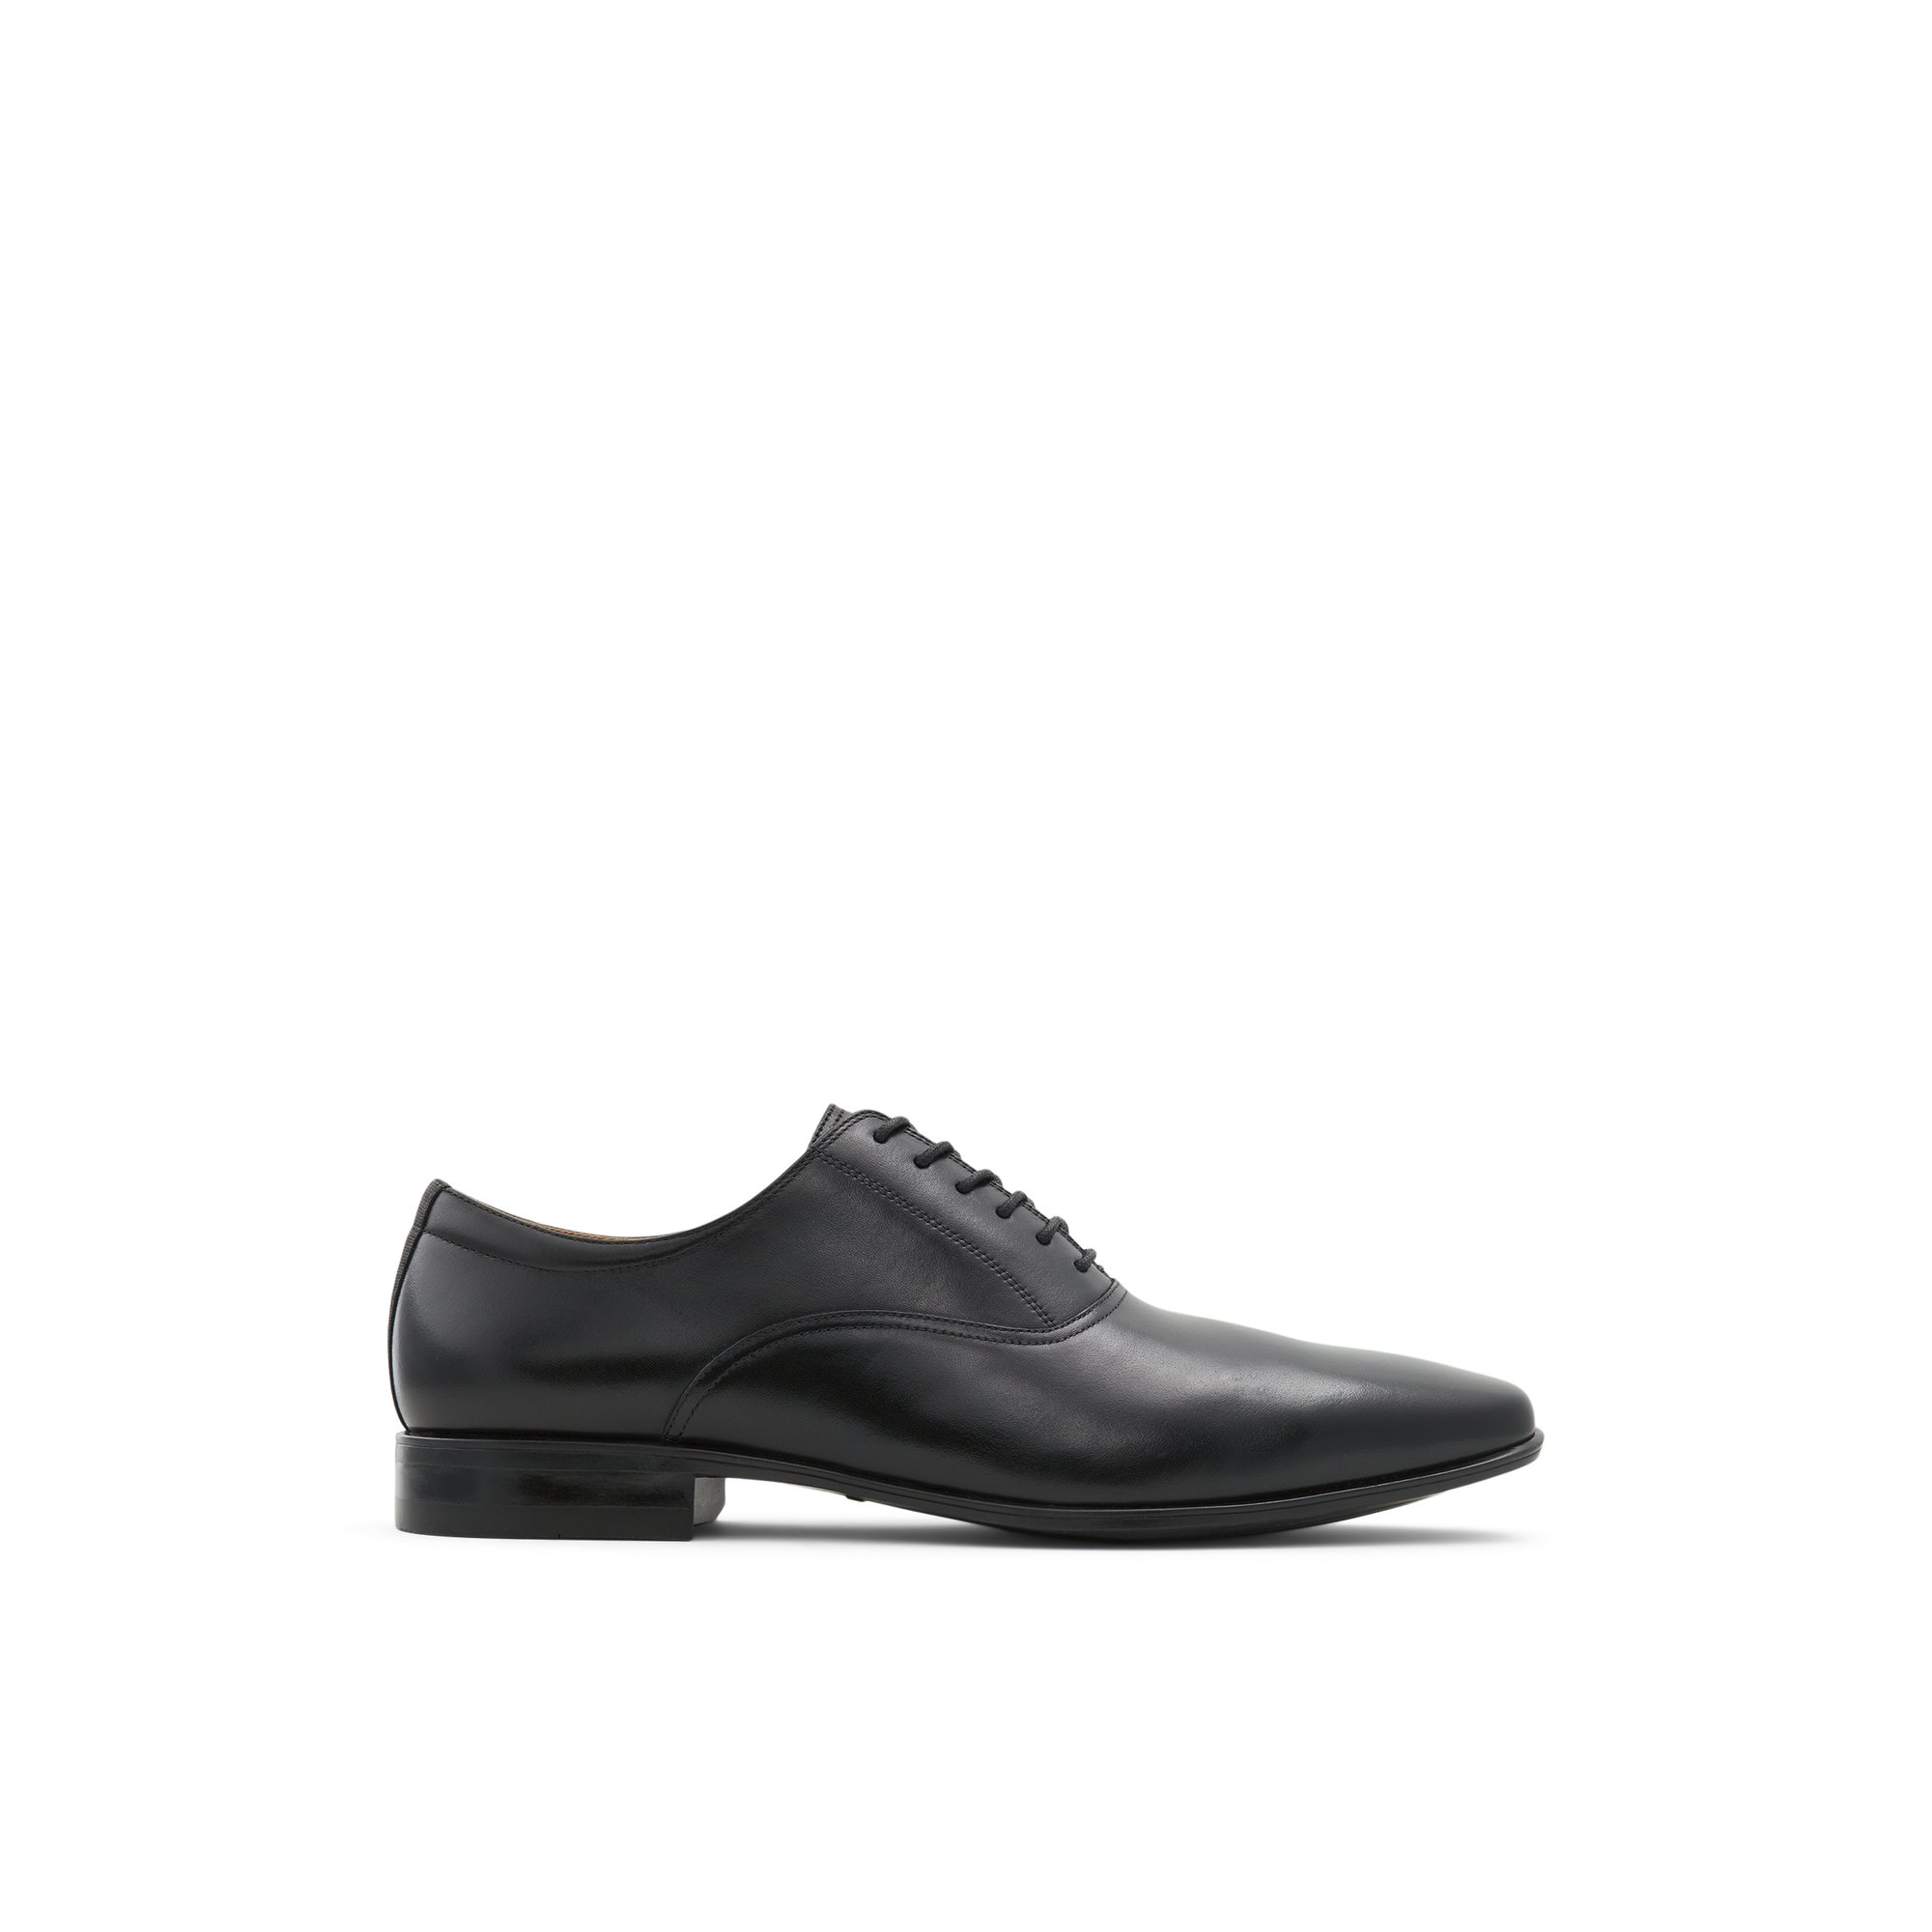 ALDO Nathon - Men's Dress Shoes - Black